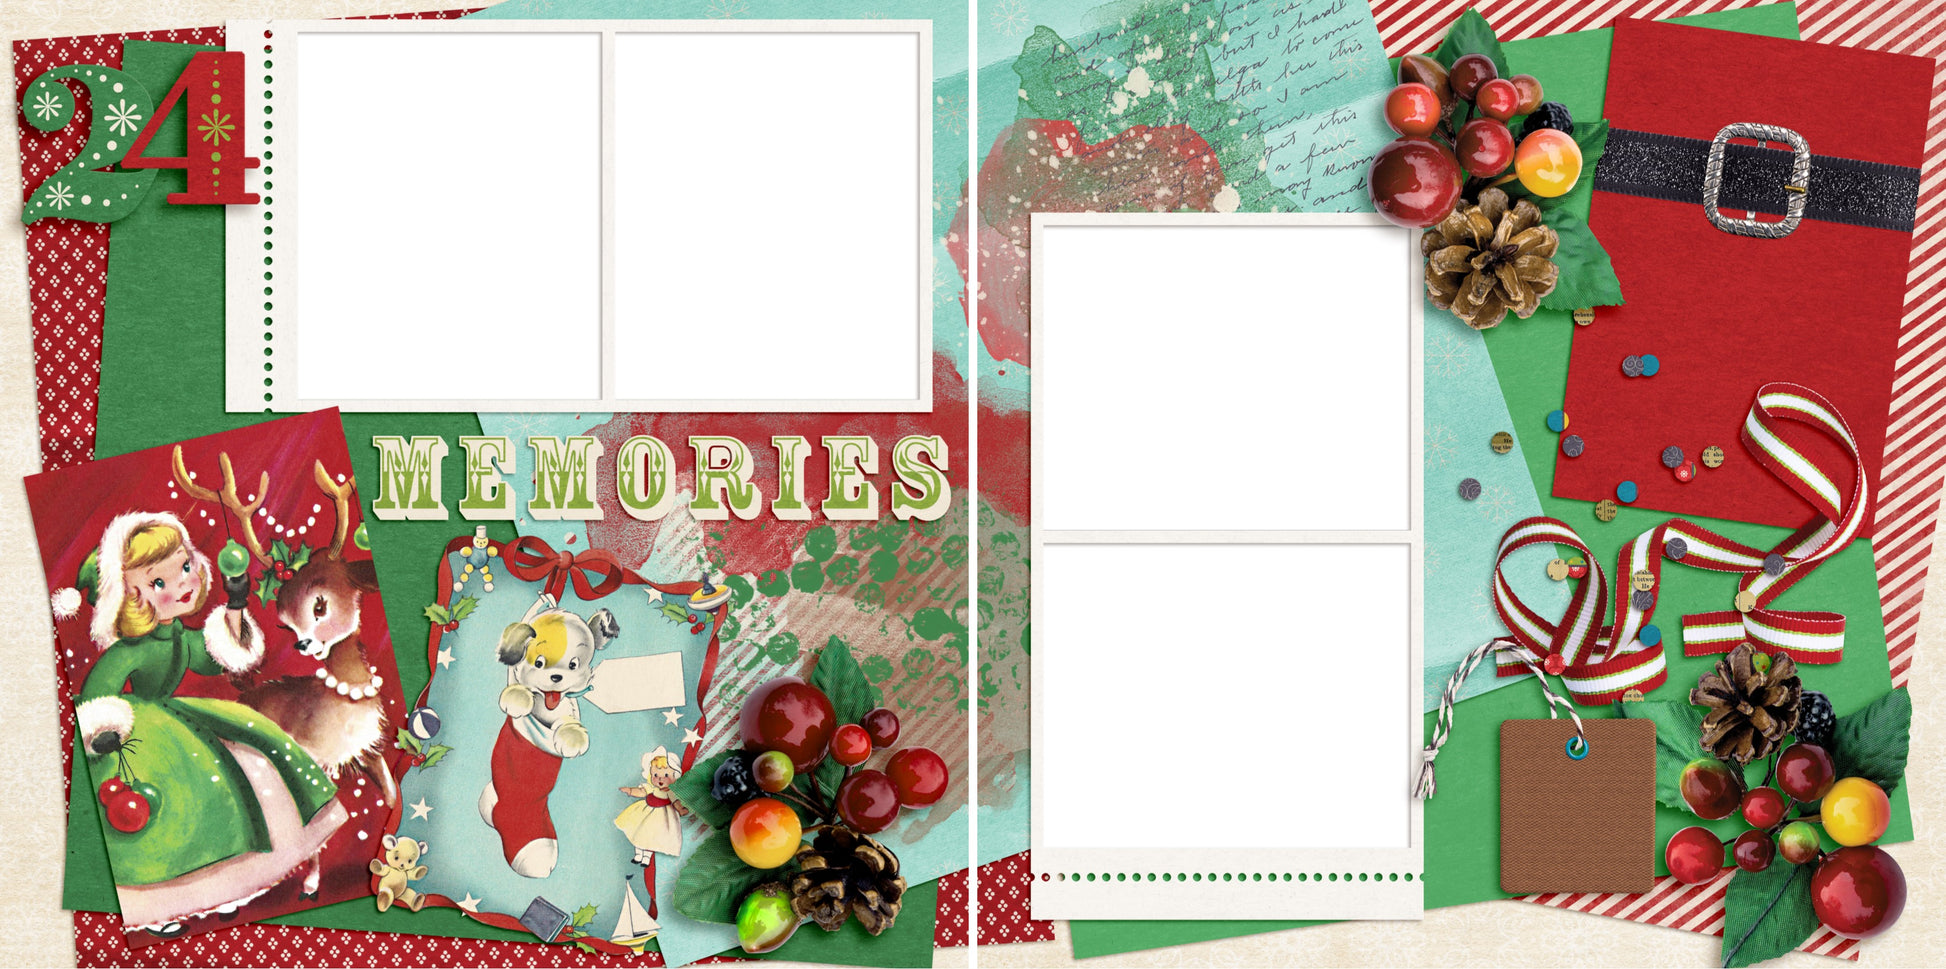 Vintage Christmas Memories - Digital Scrapbook Pages - INSTANT DOWNLOAD - 2019 - EZscrapbooks Scrapbook Layouts Christmas